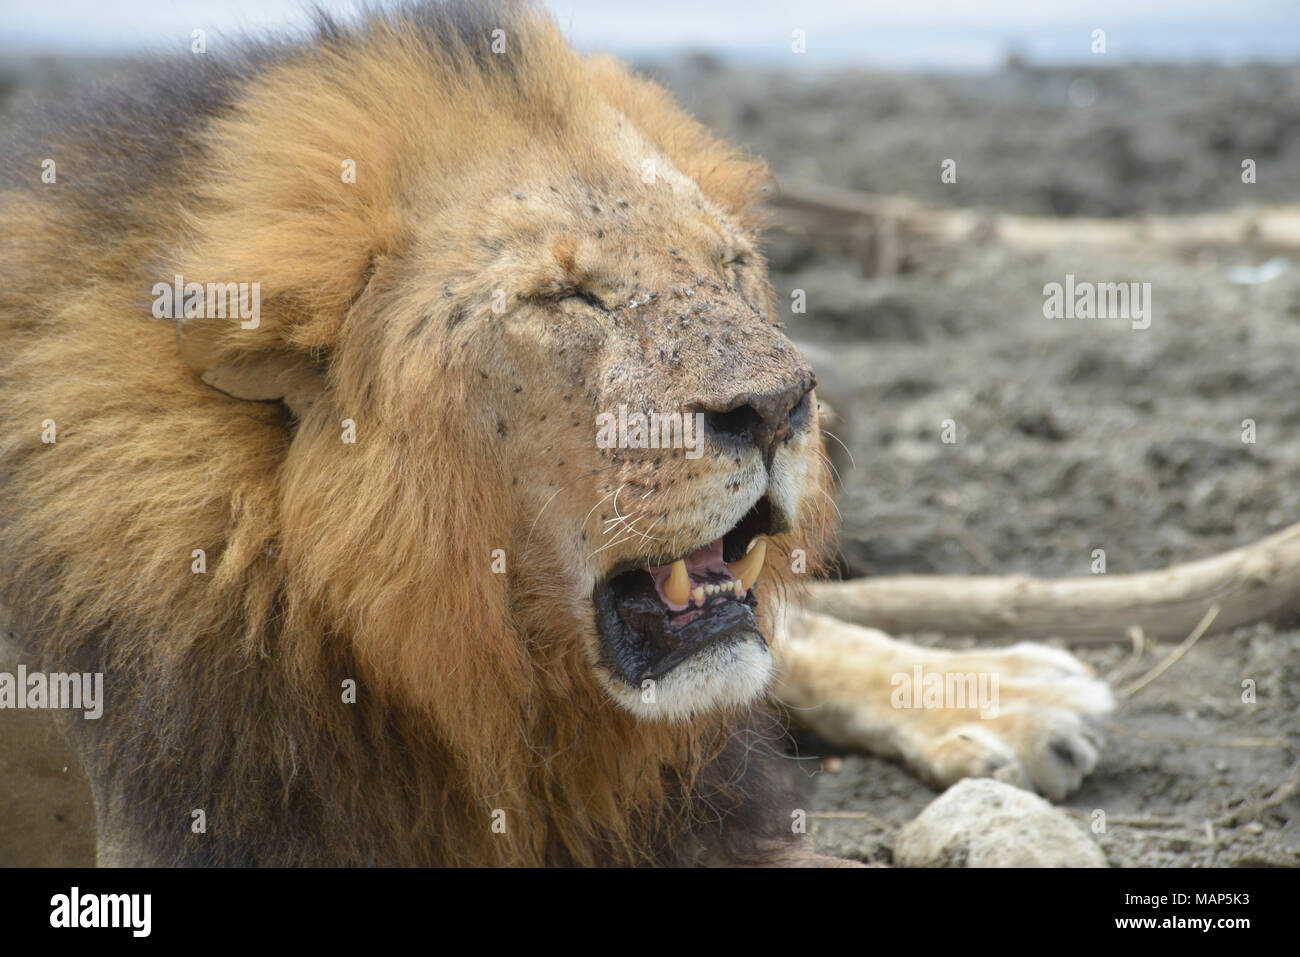 Male lion close up, by Lake Nakuru, Kenya. Stock Photo